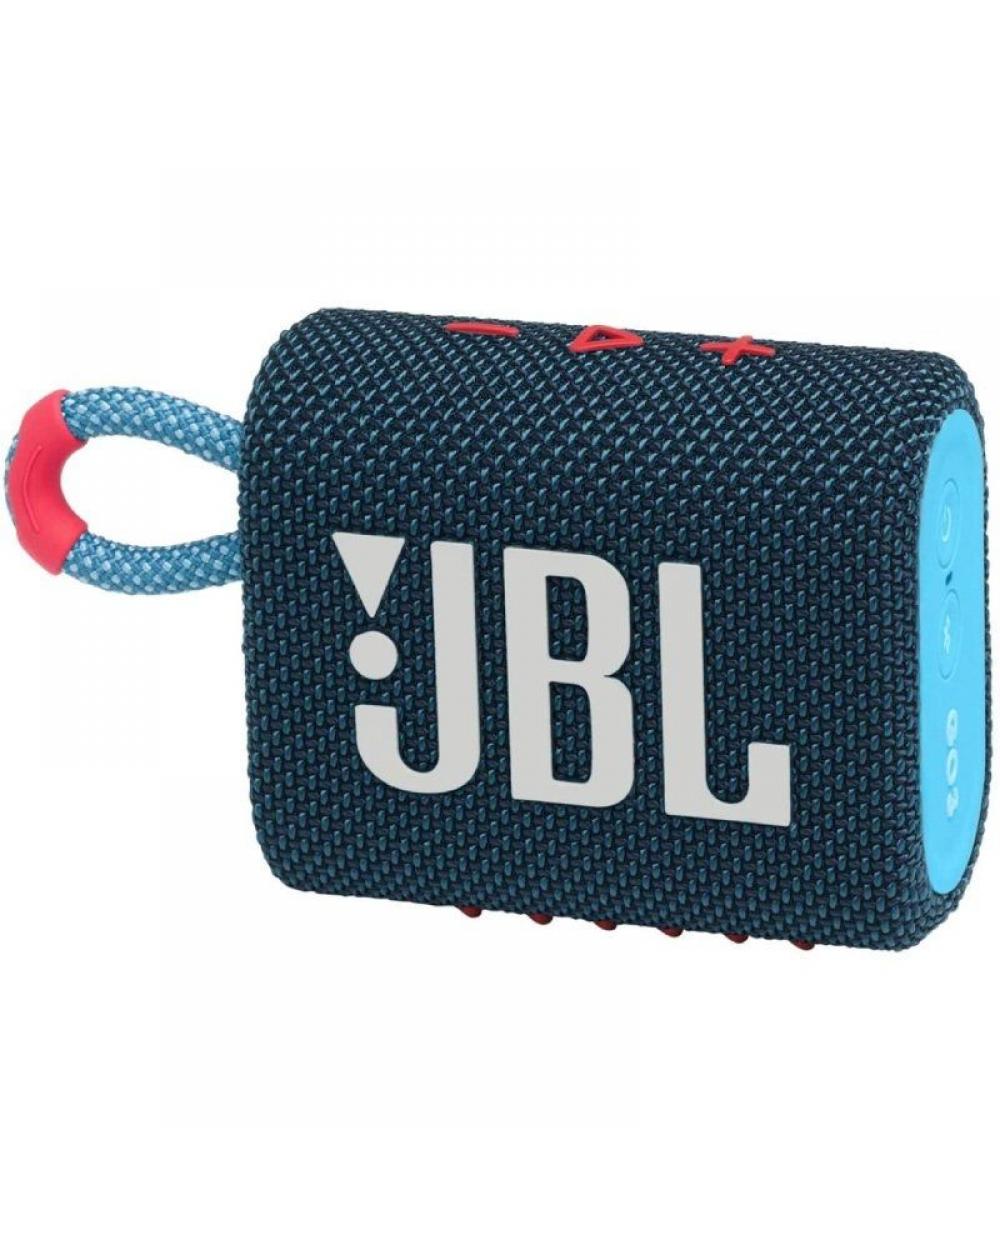 Altavoz con Bluetooth JBL GO 3/ 4.2W/ 1.0/ Azul Rosa